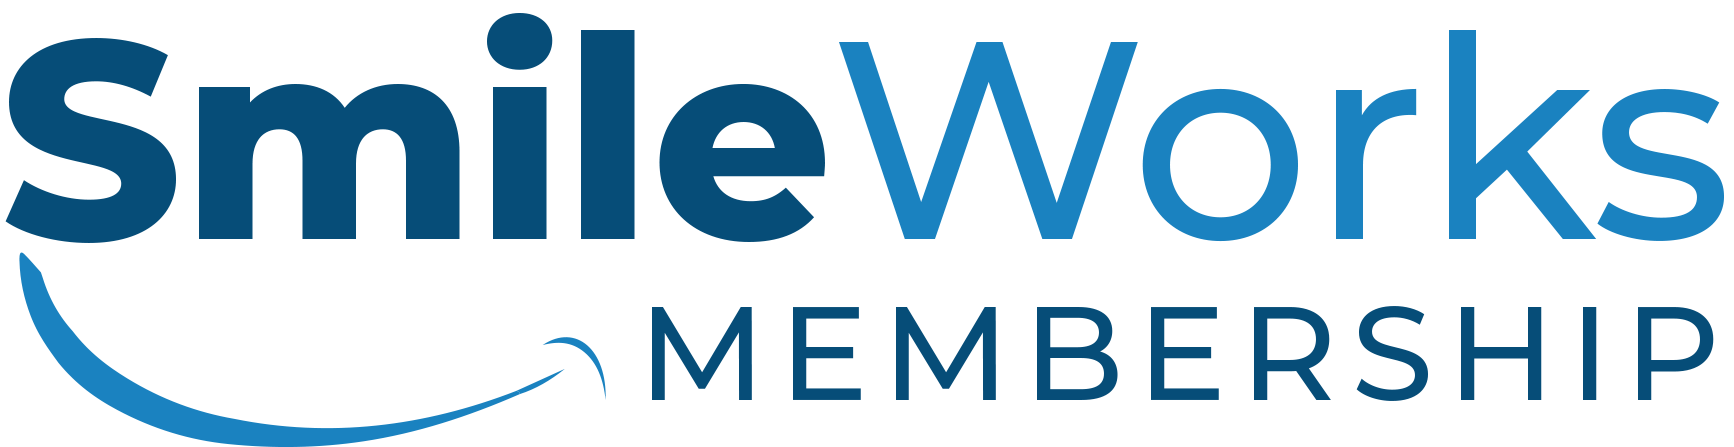 SmileWorks Membership